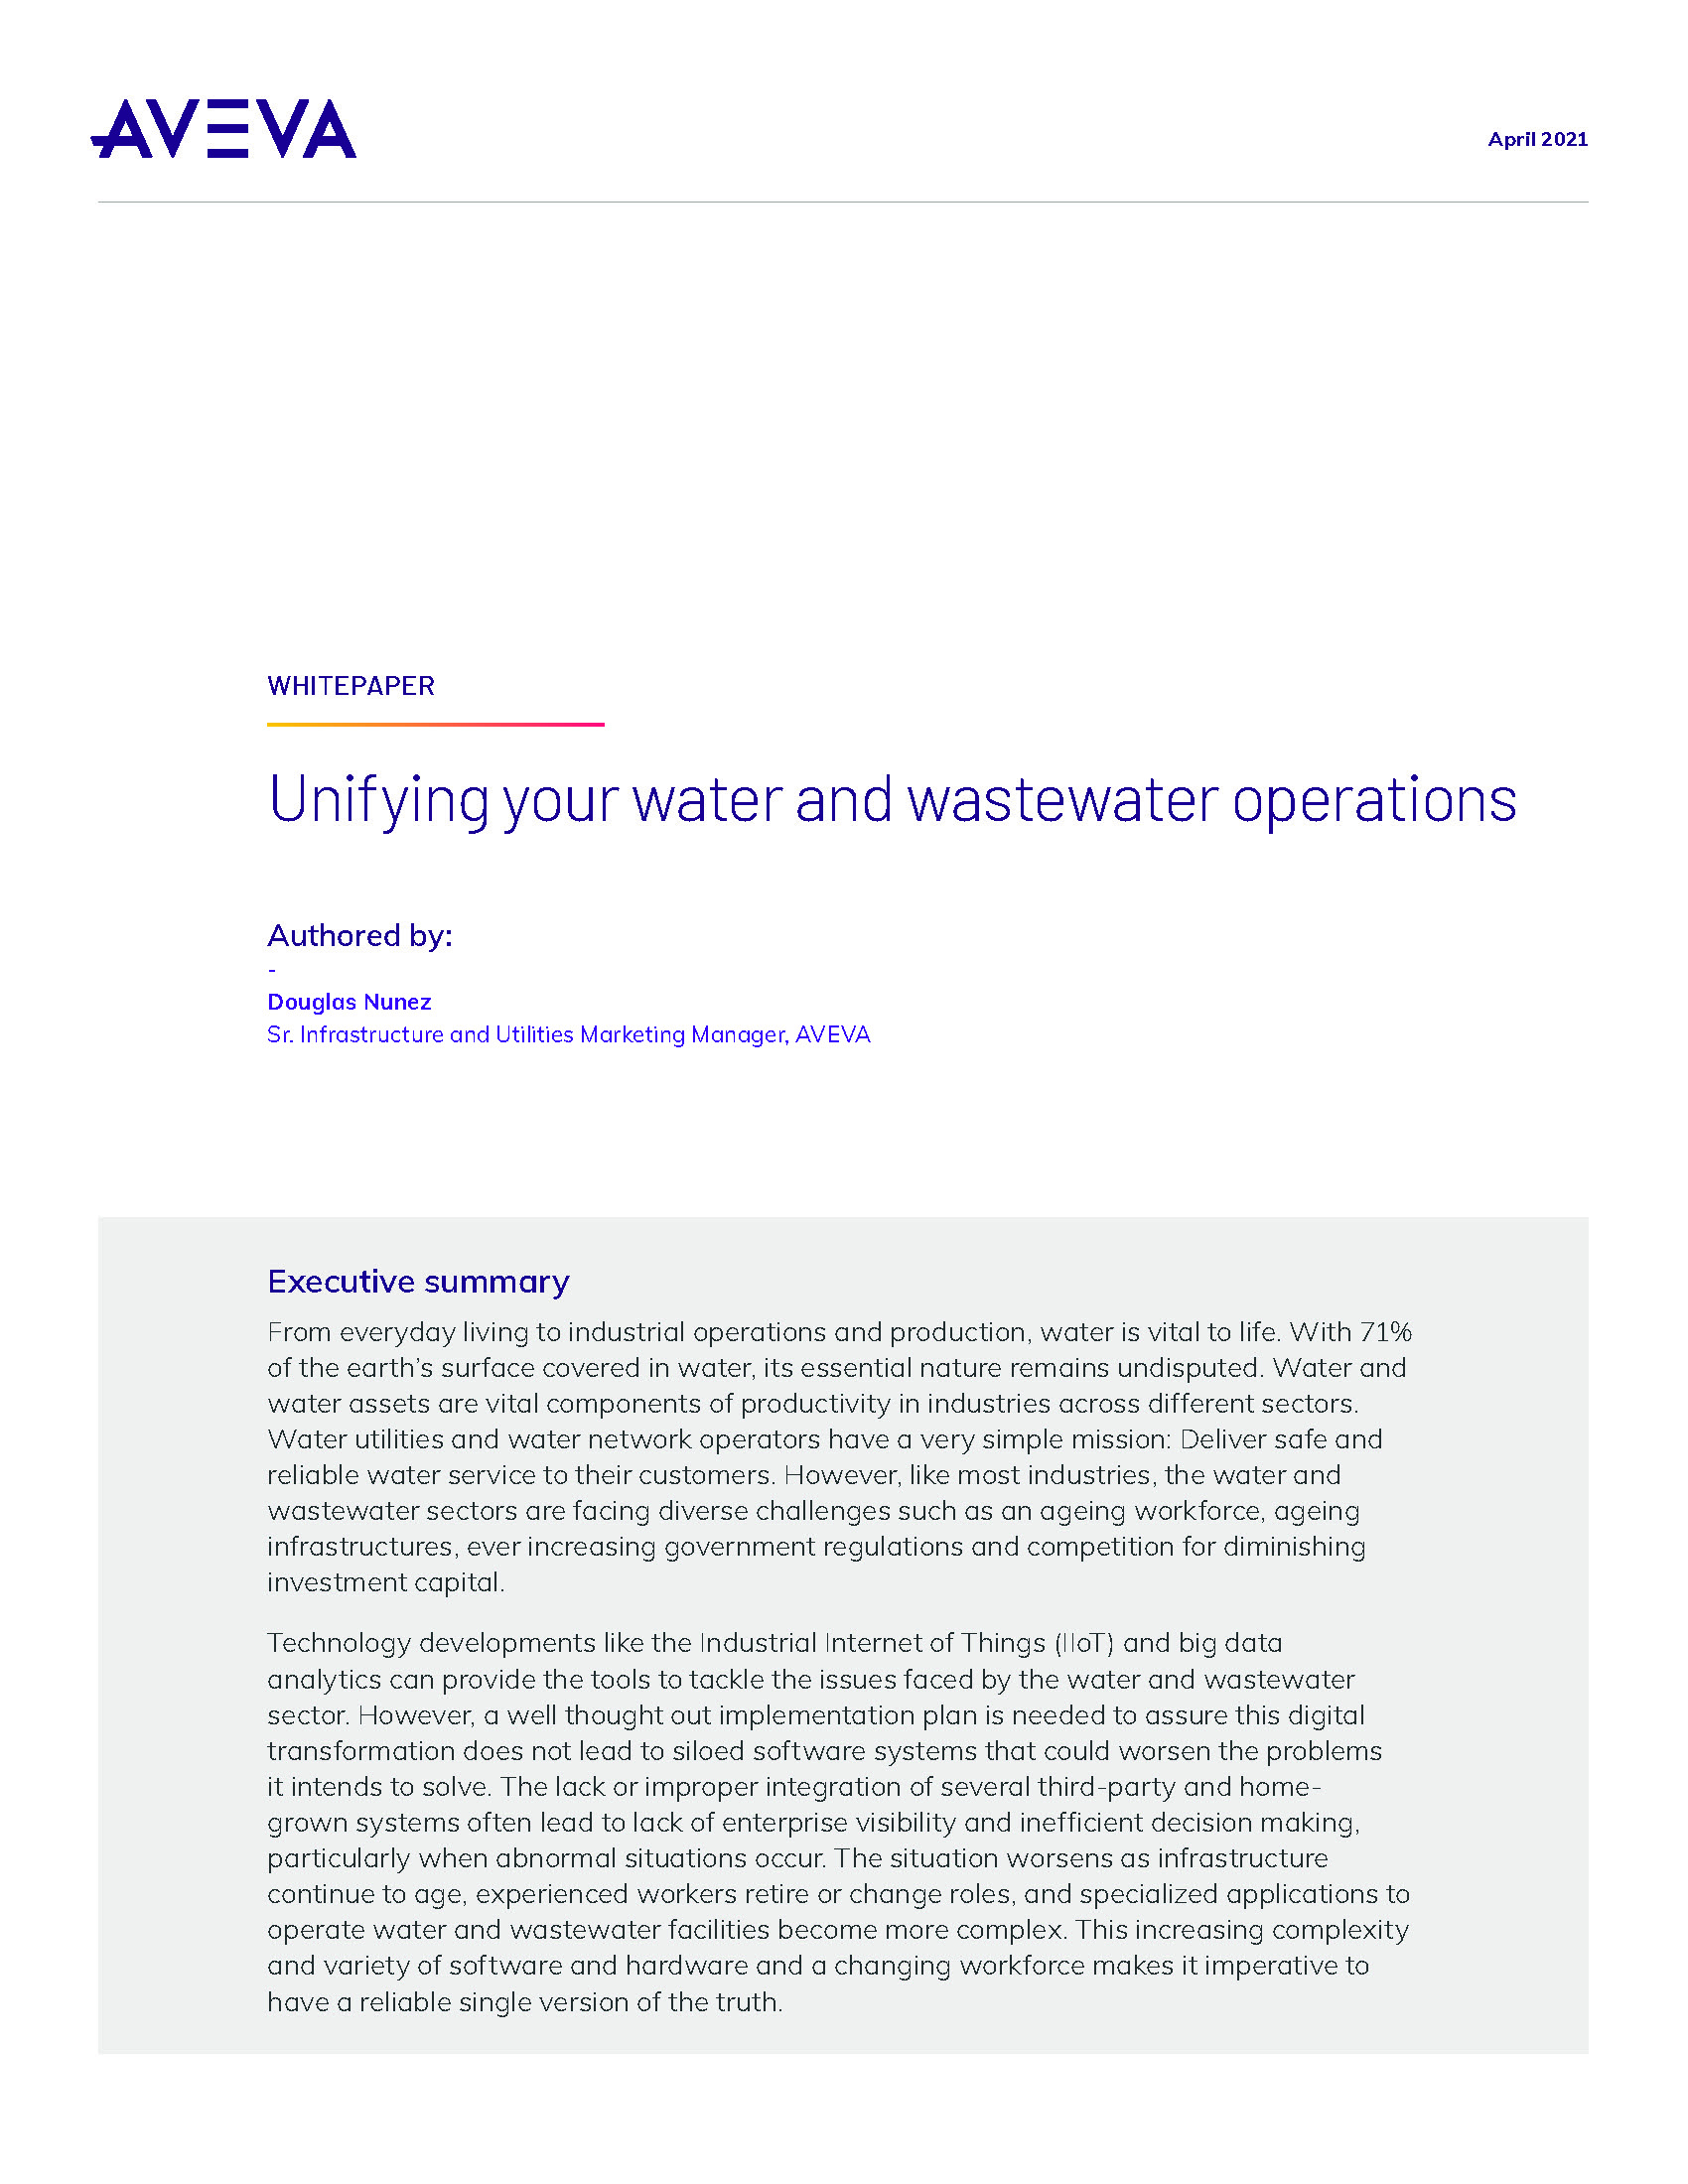 Pages from Whitepaper_AVEVA_UnifyingwaterandwastewaterOperation_04-21.jpg